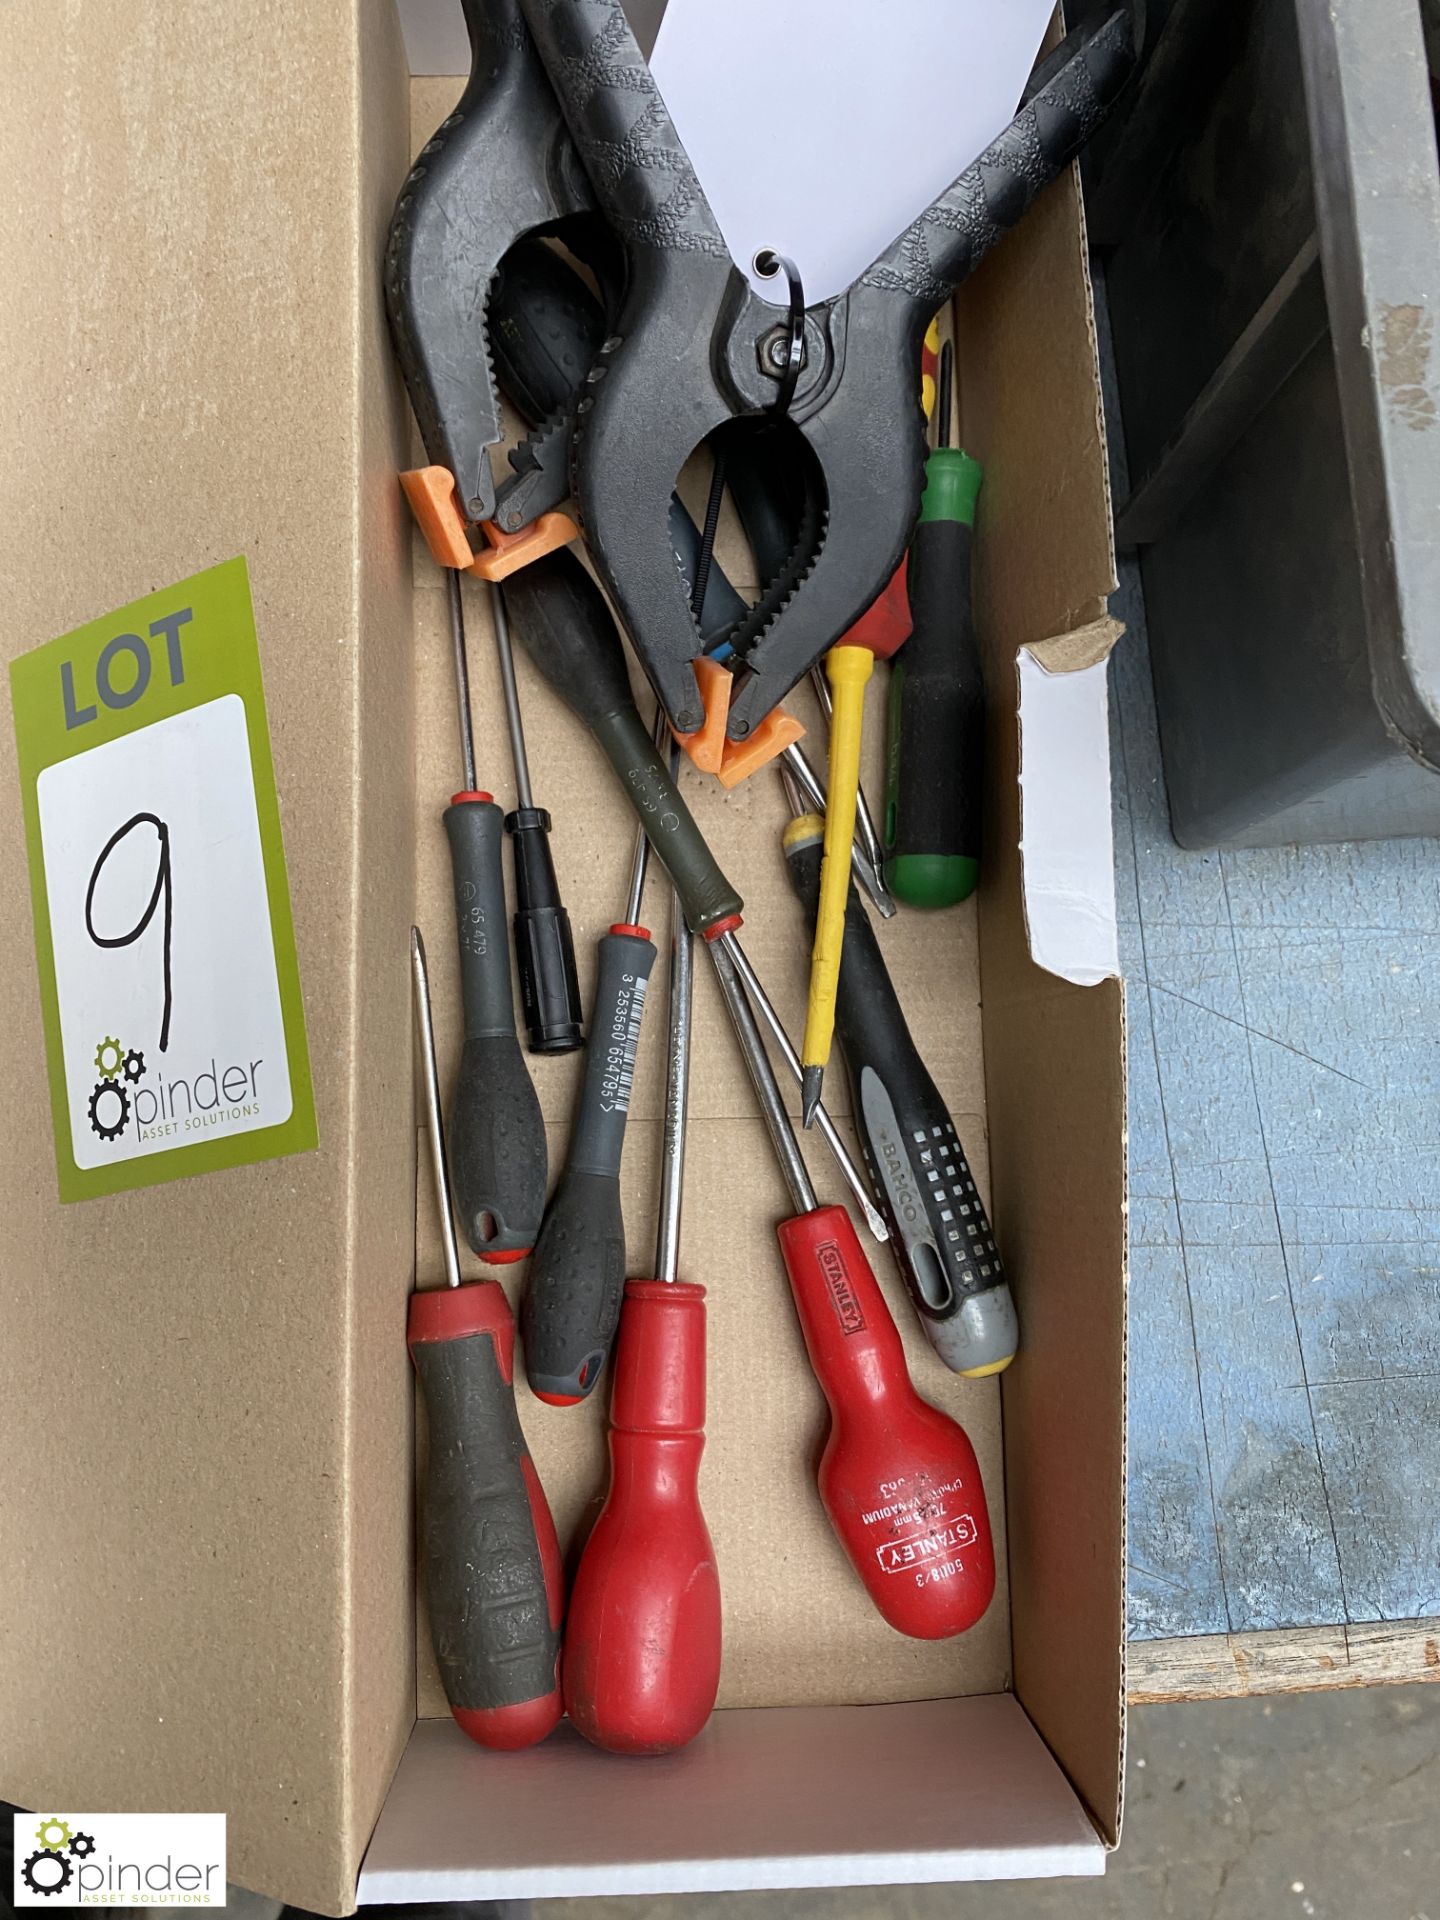 Quantity Hand Tools including pop riveter, clamps, screwdrivers, sockets, etc - Image 4 of 6